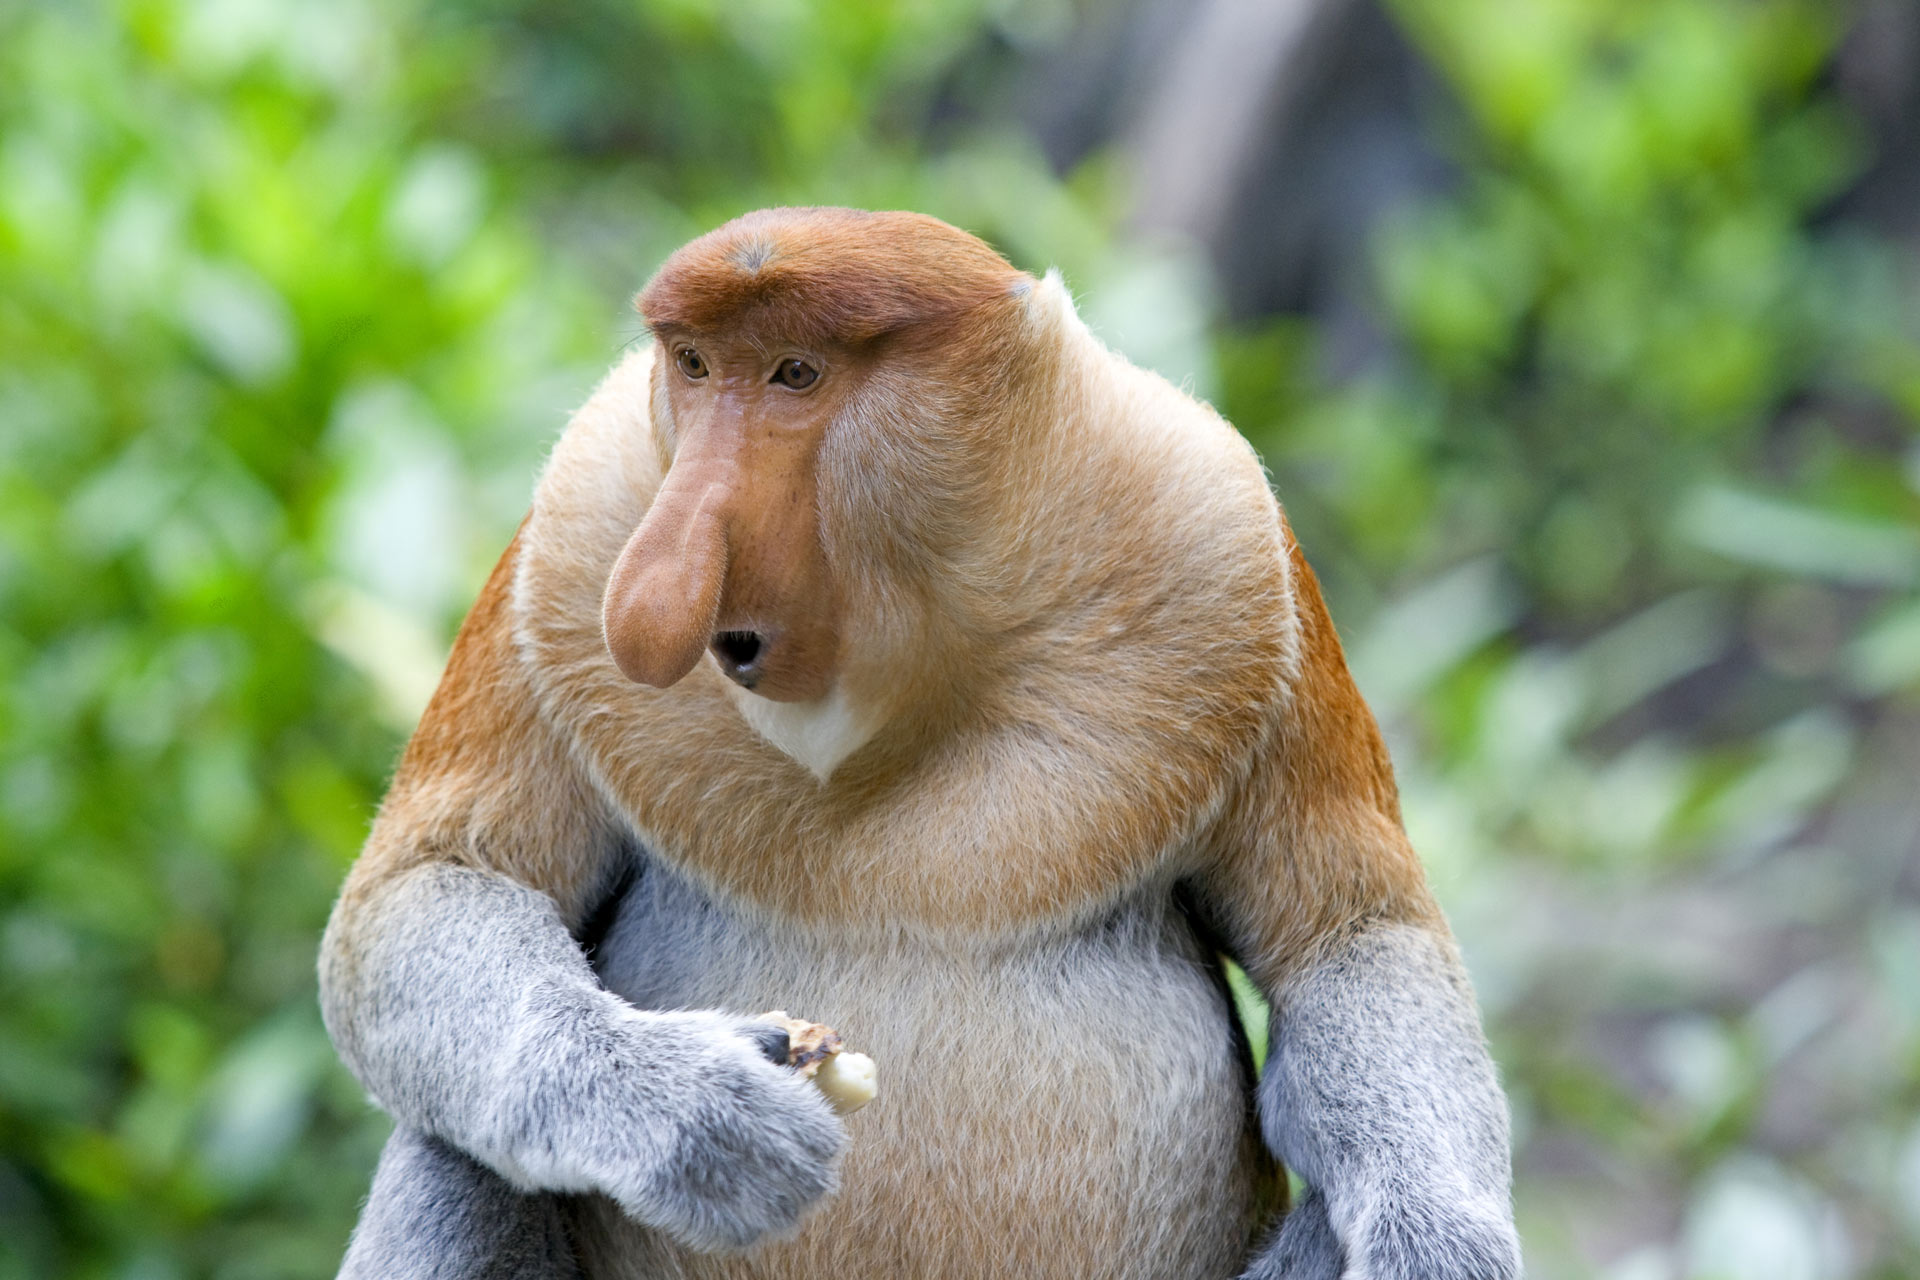 A rare proboscis monkey